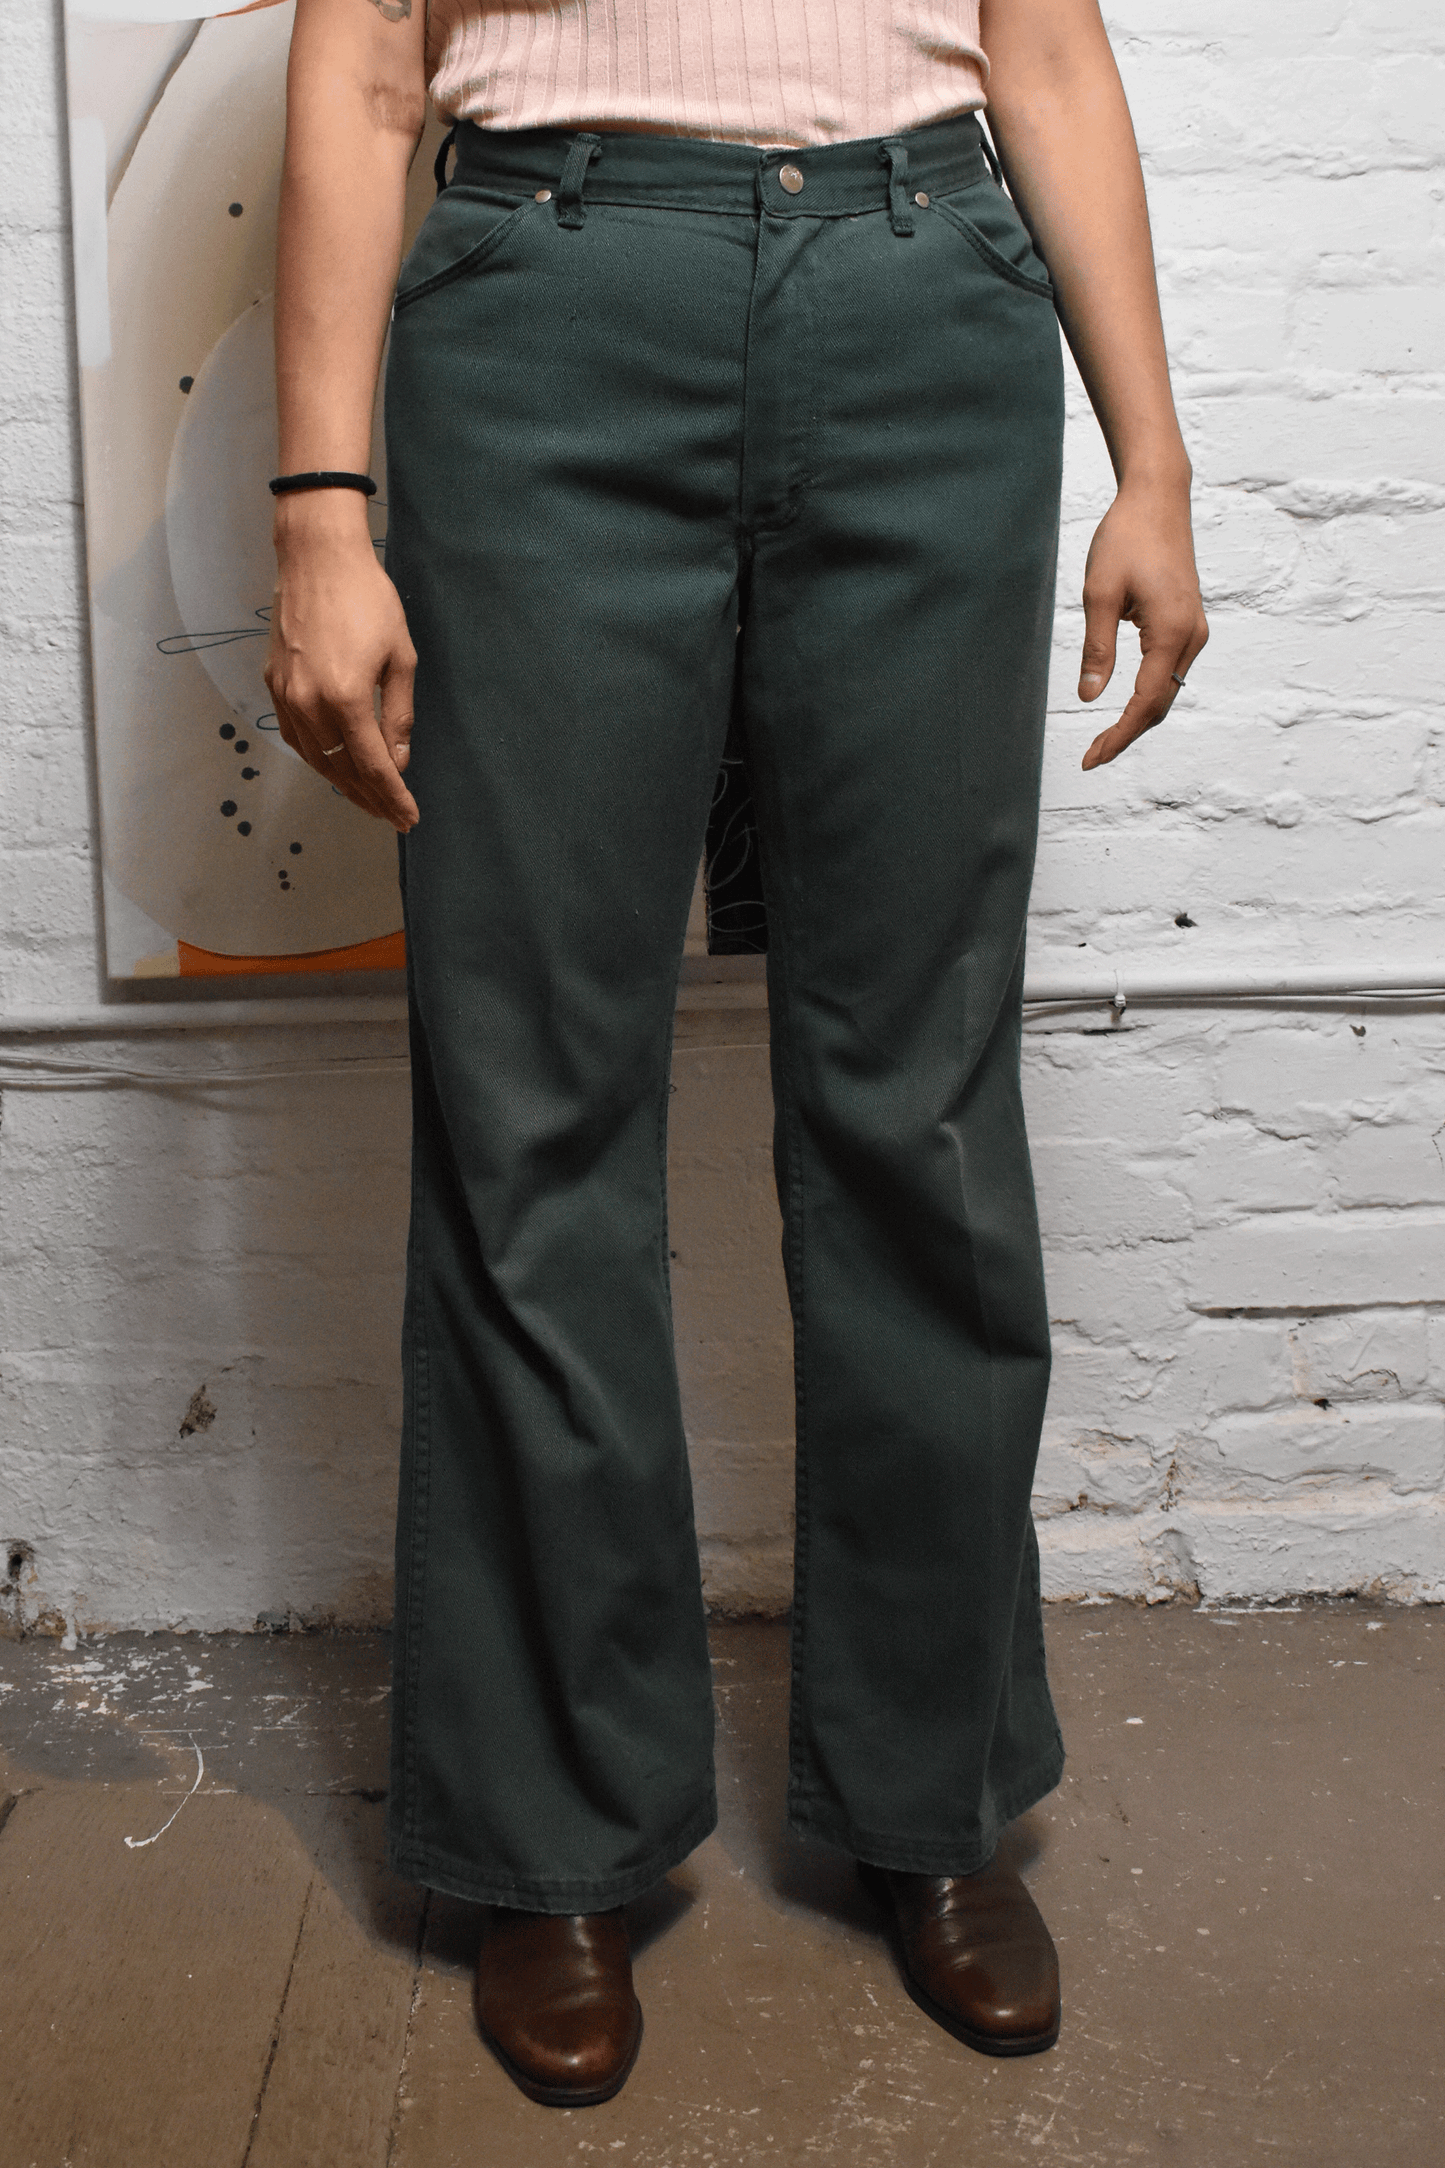 Vintage 1960s "Wrangler" Forest Green Pants